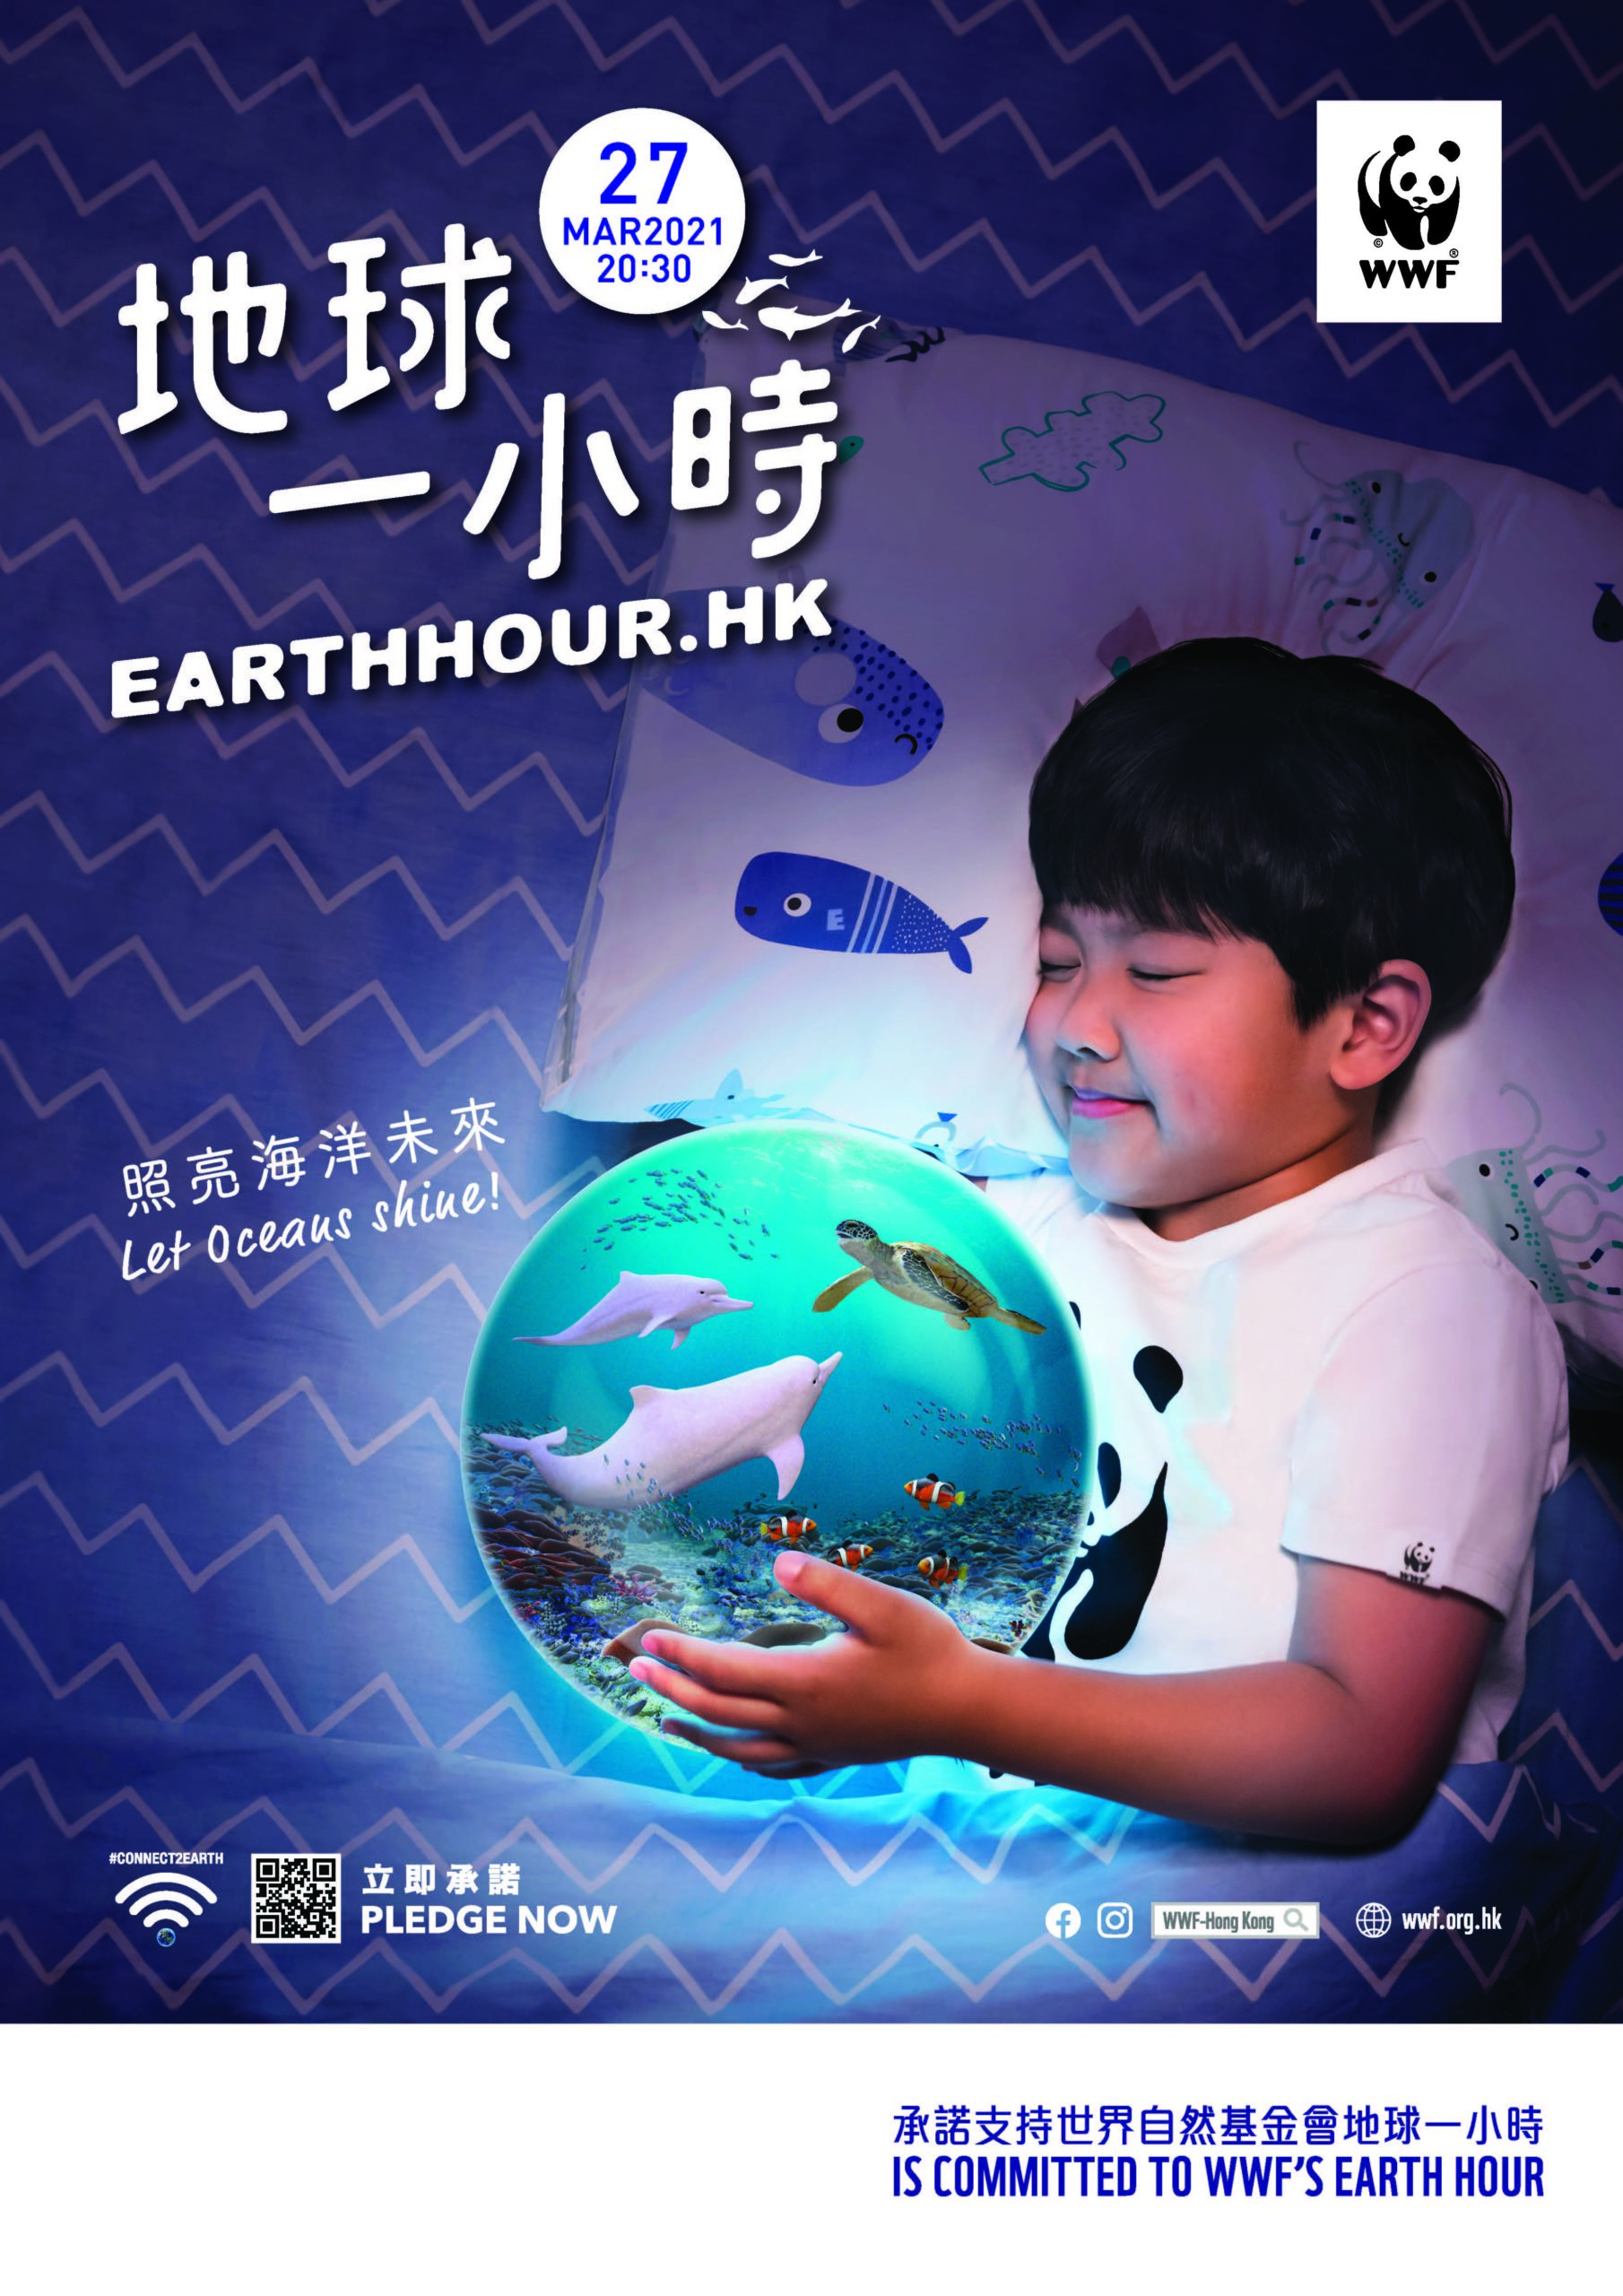 CUHK Participates in ‘Earth Hour’